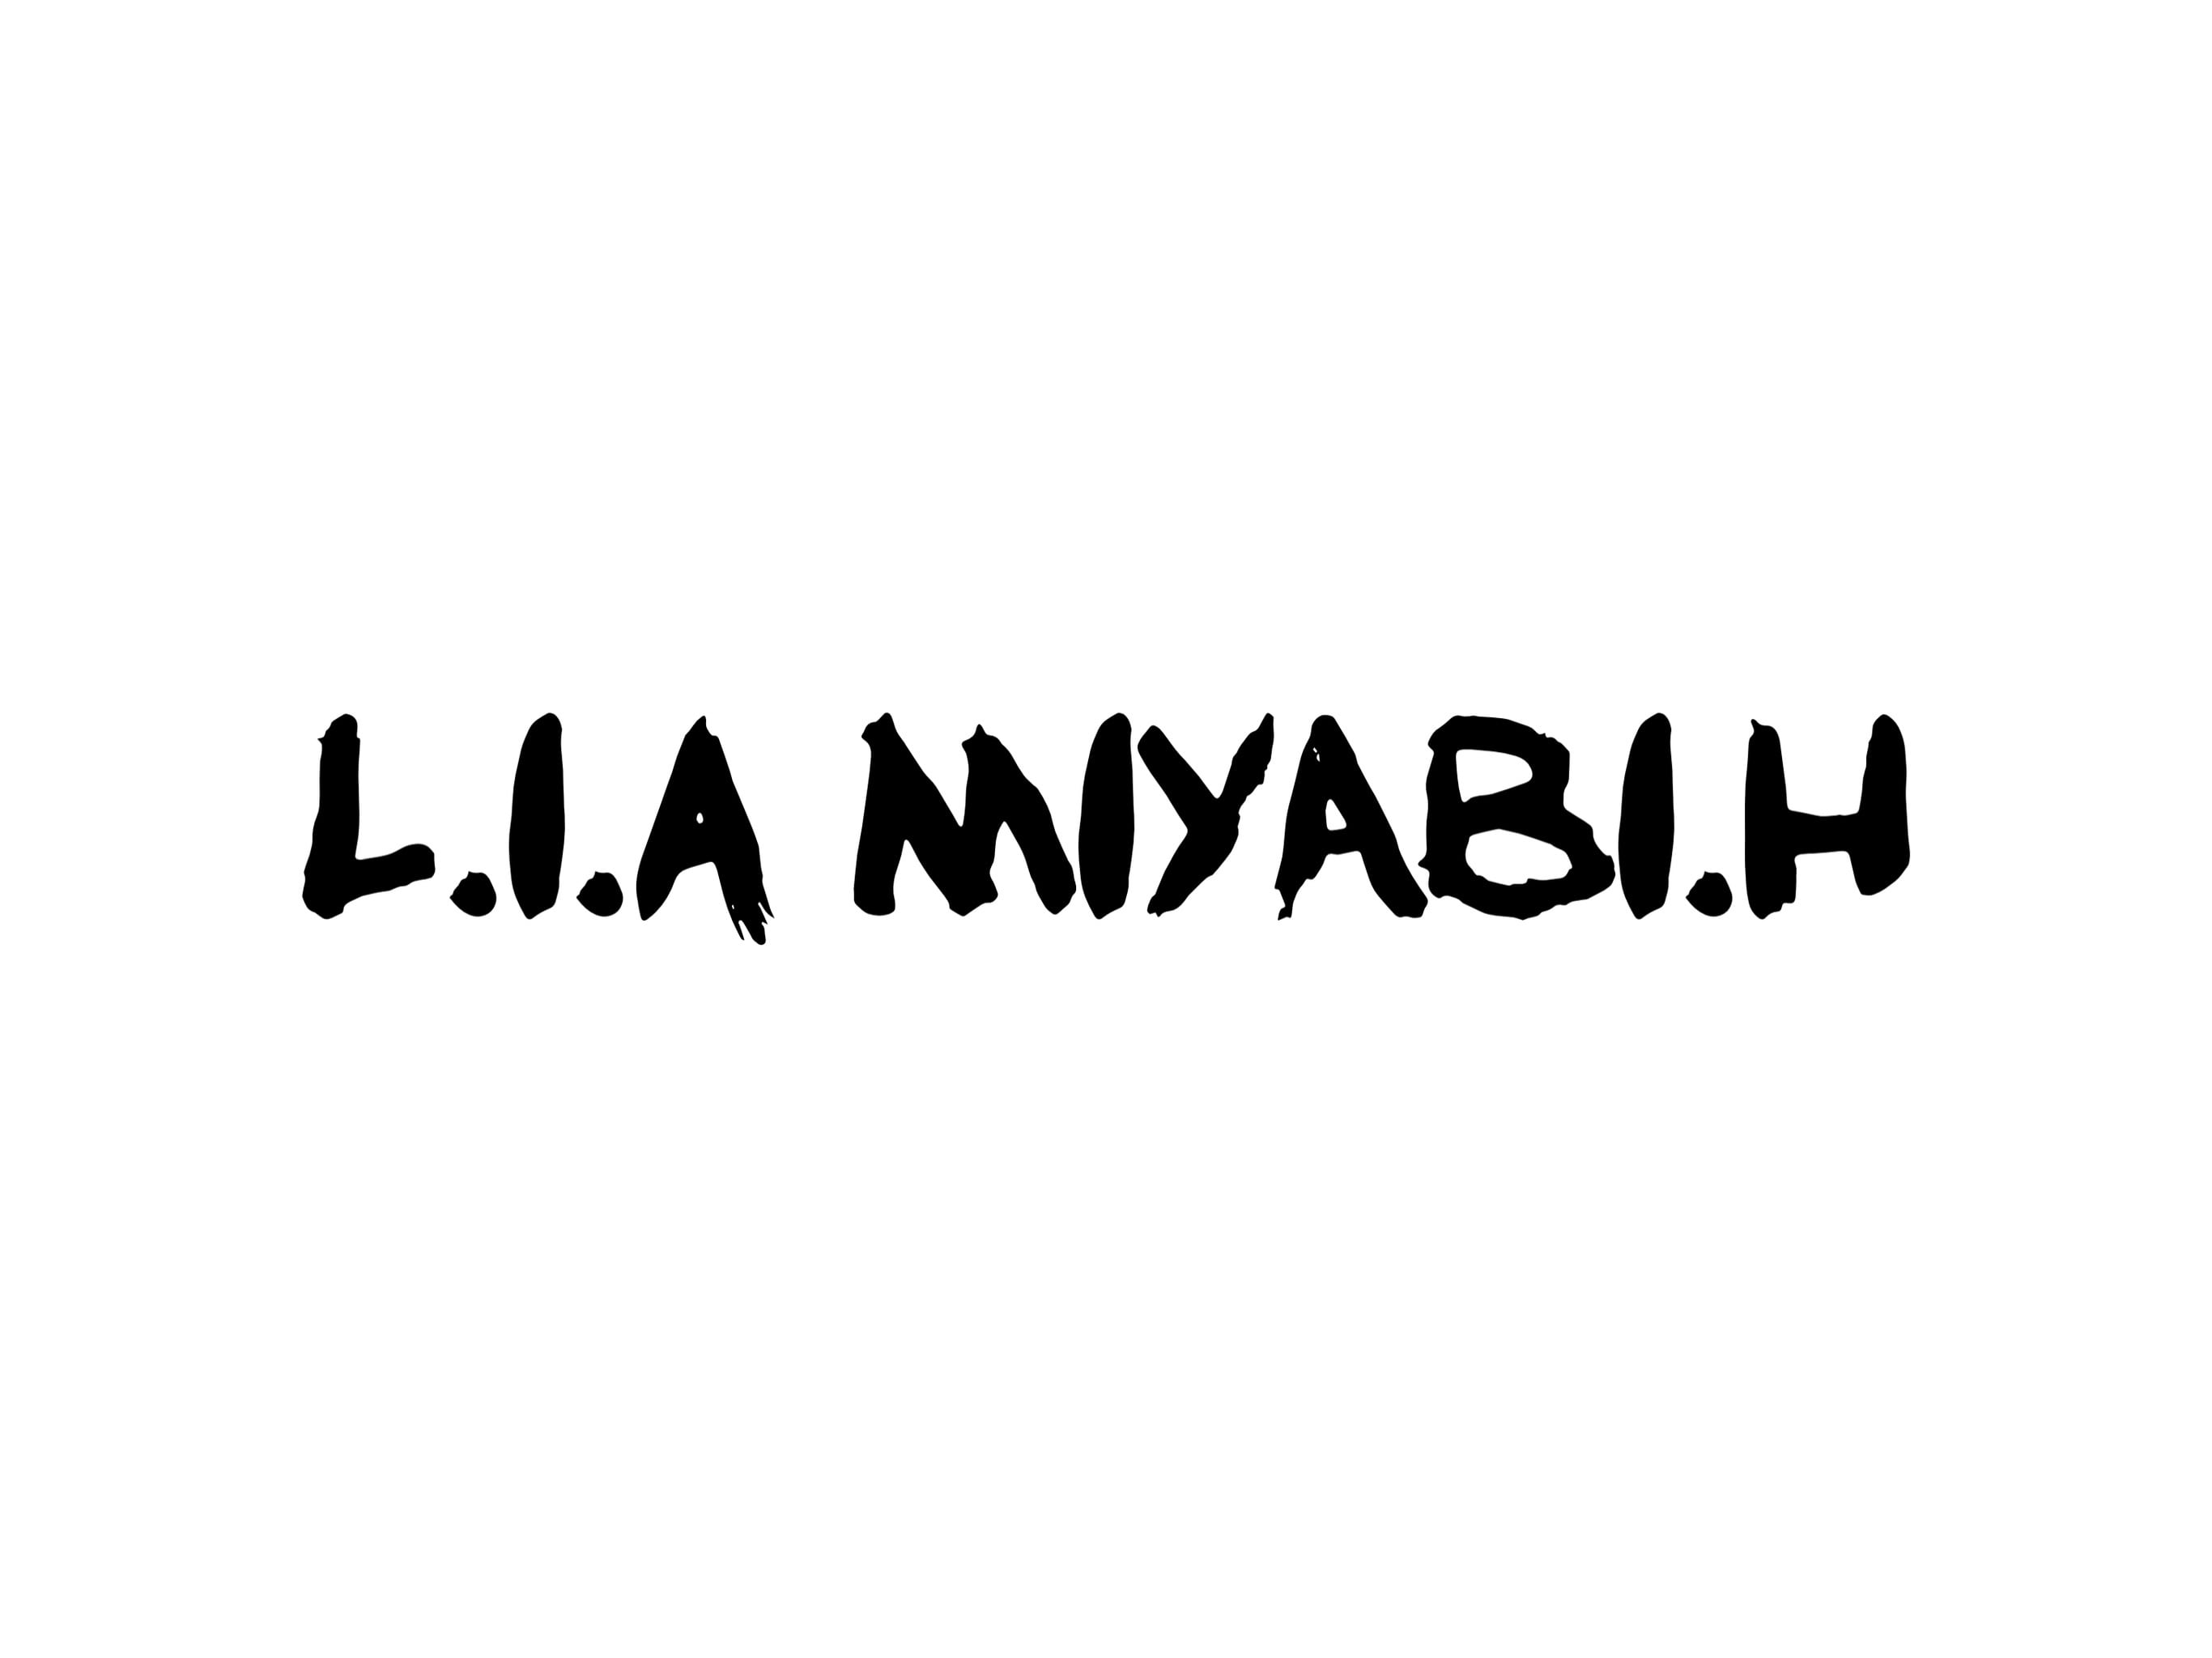 L.I.A MIYABI.H